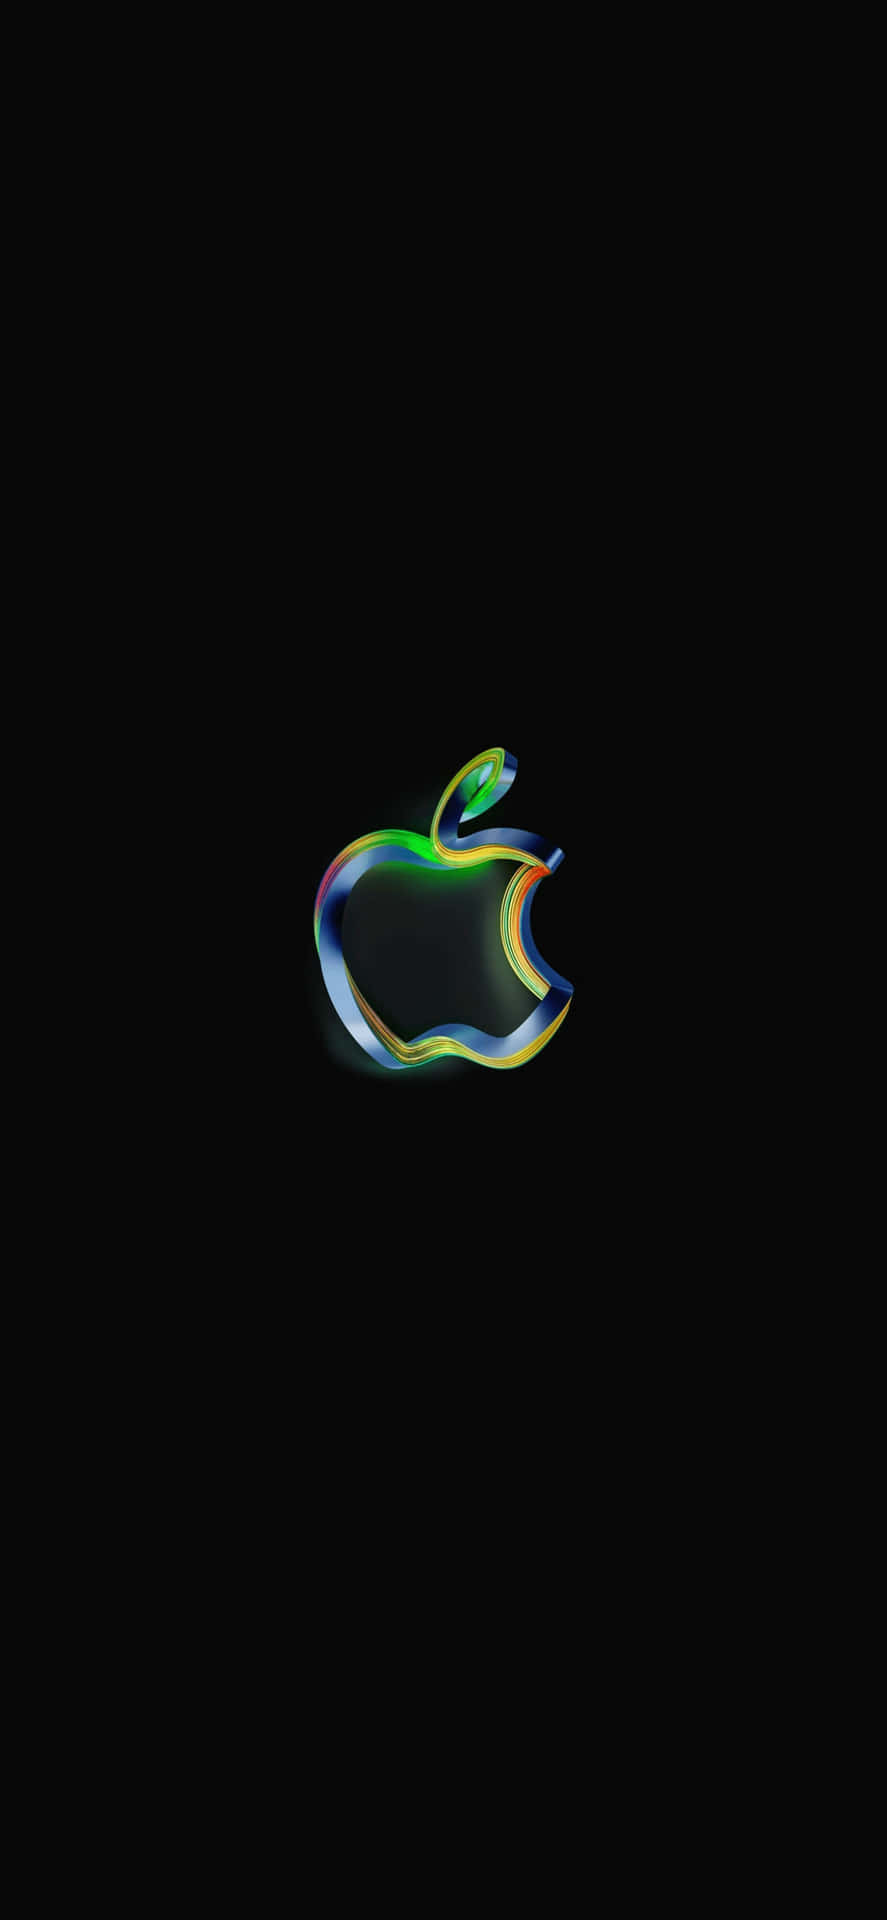 Logodes Iphone X Von Apple Inc. Wallpaper